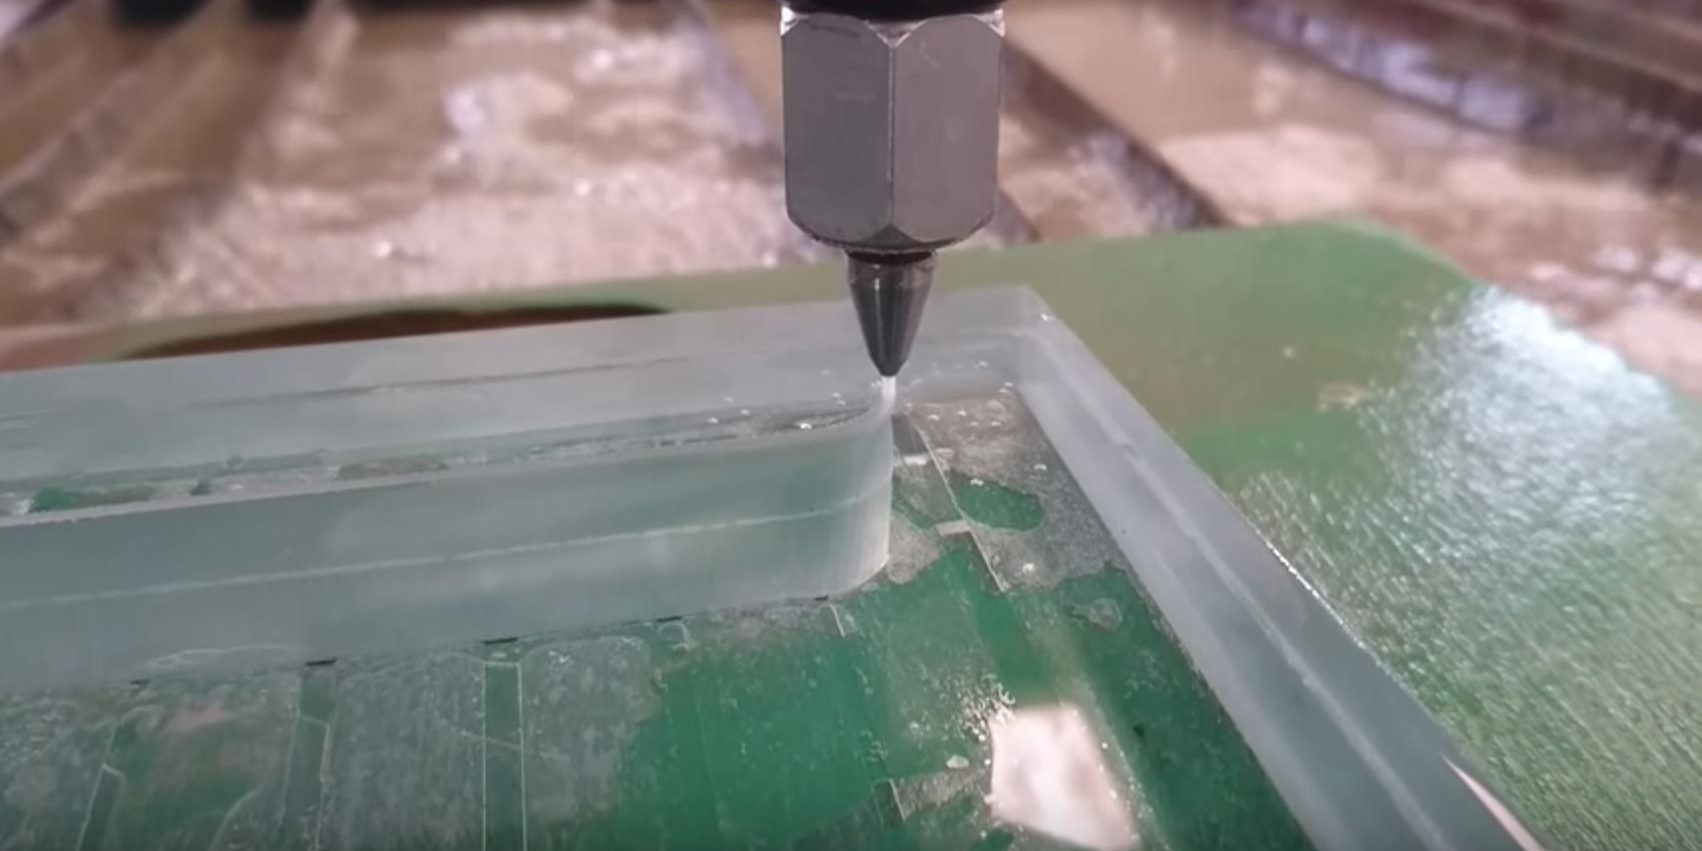 Custom Glass Cutting